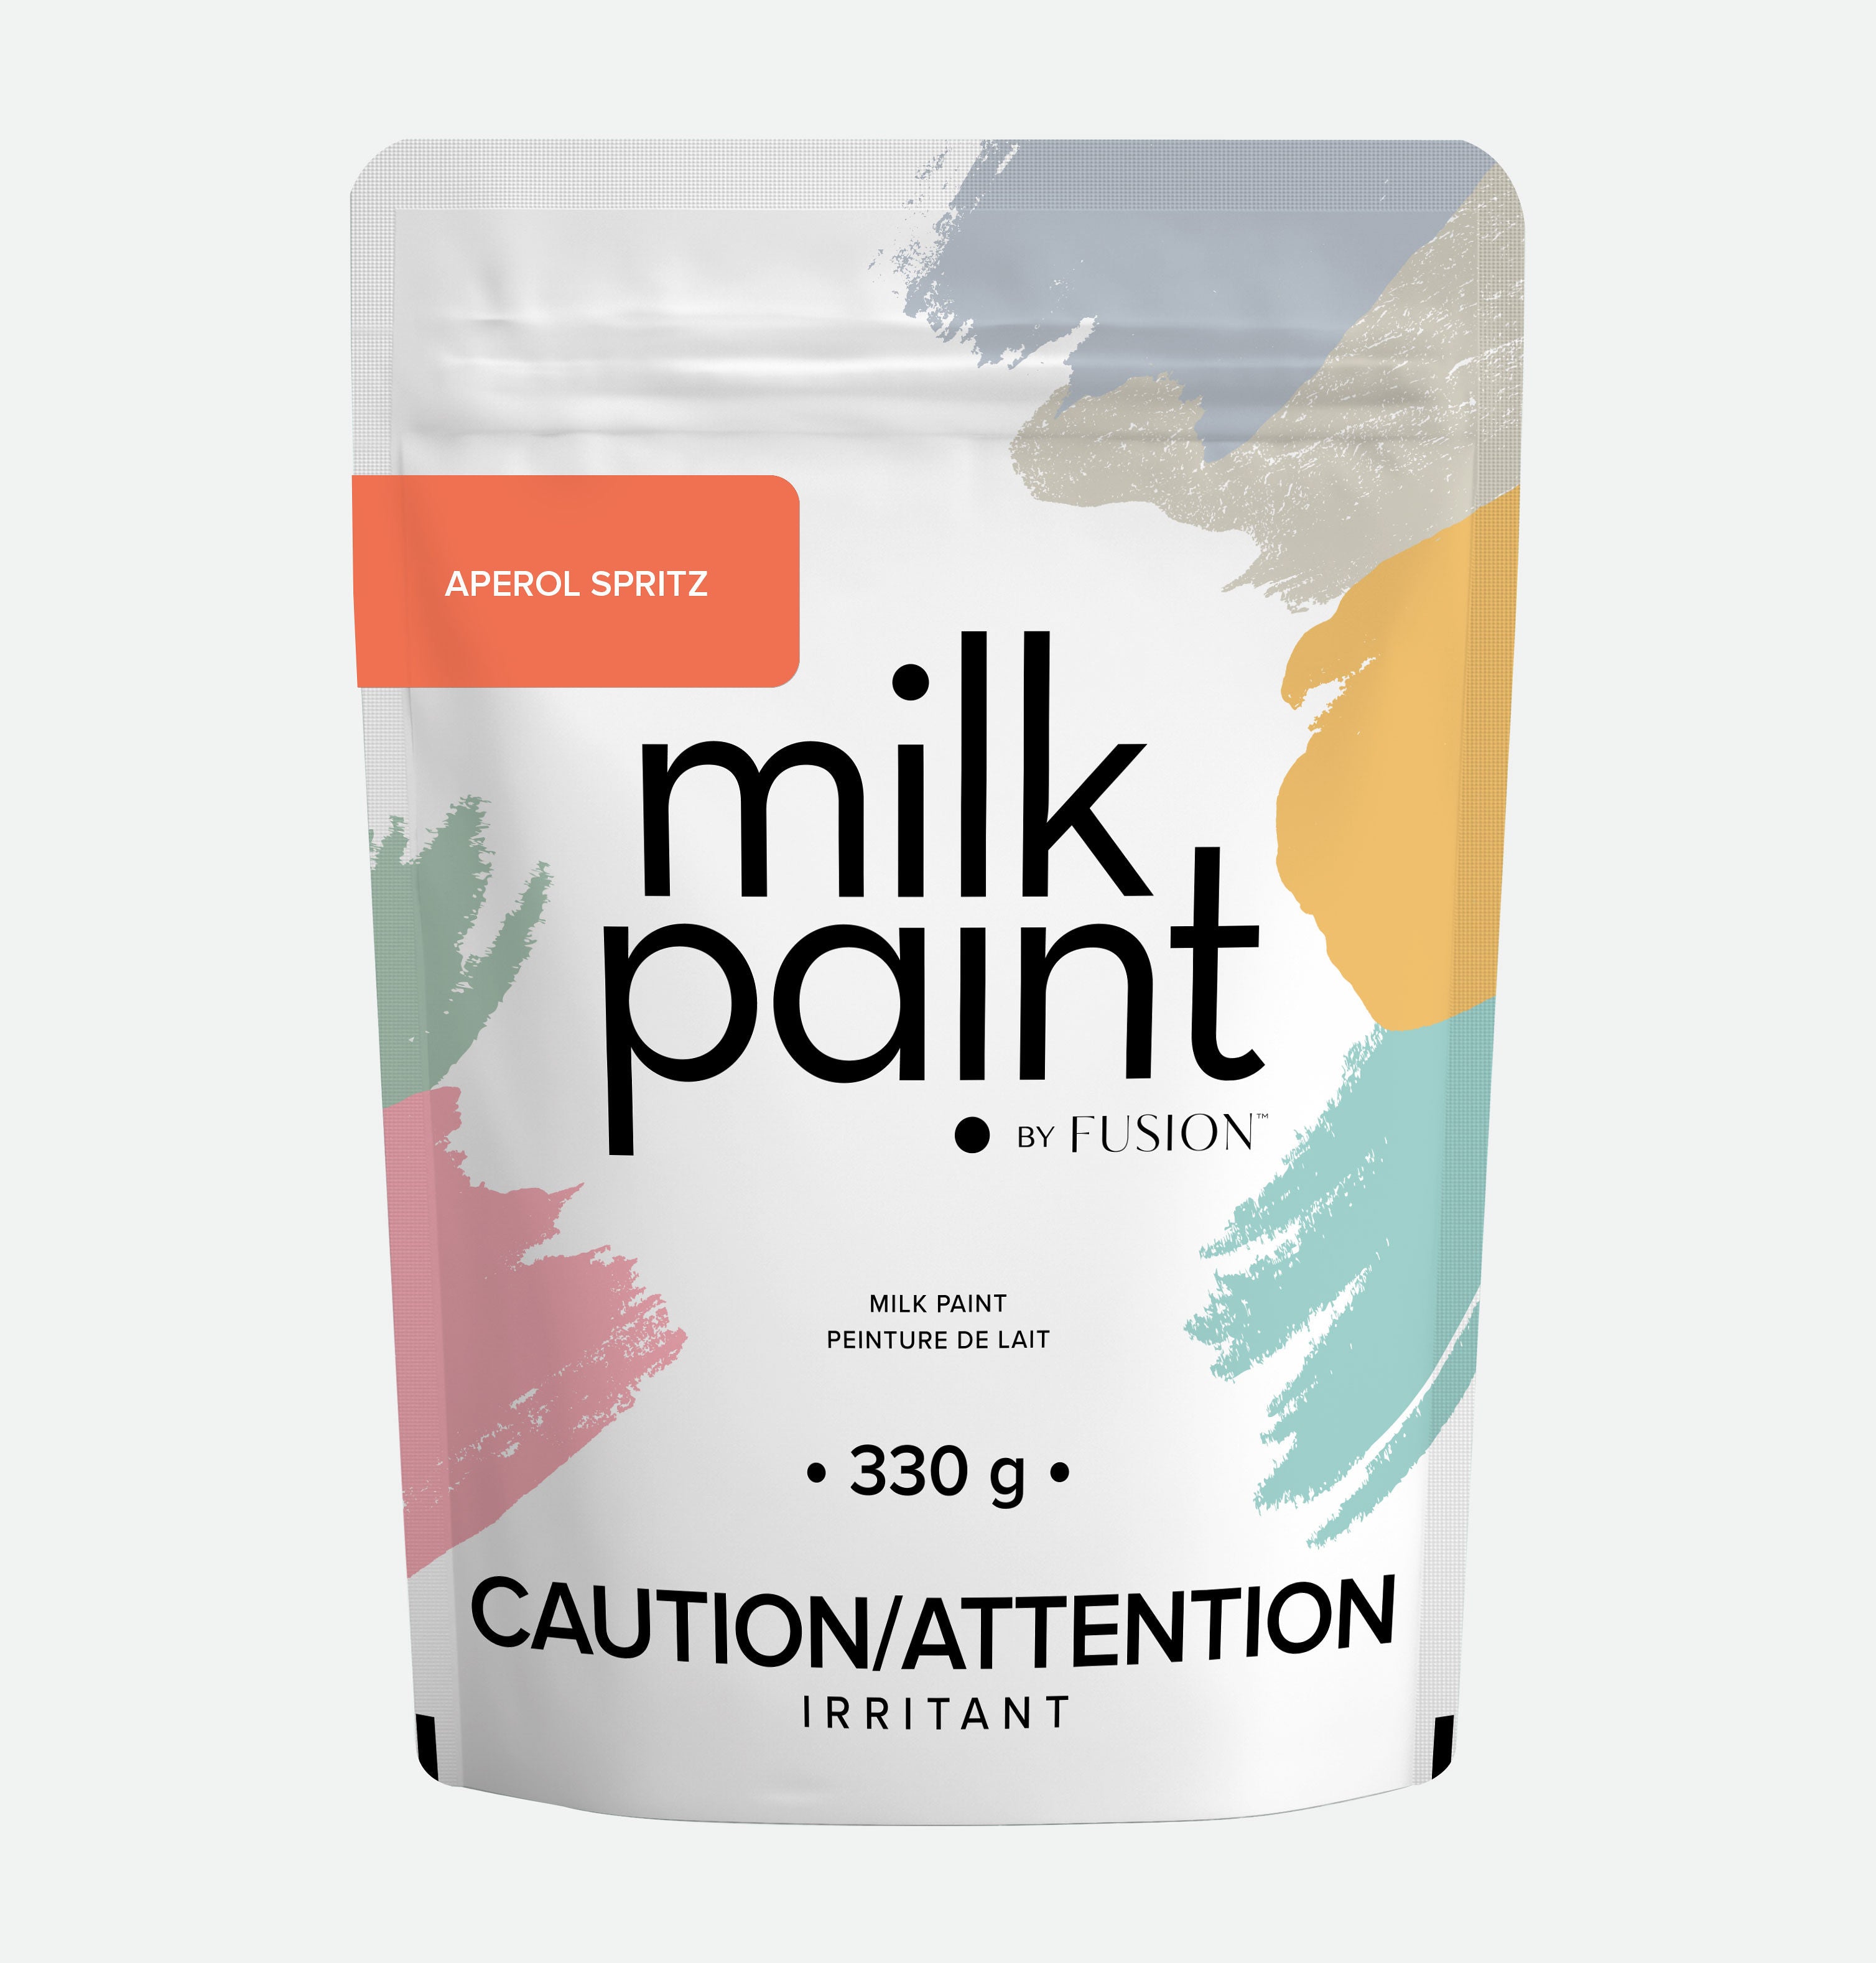 Aperol Spritz Milk Paint by Fusion